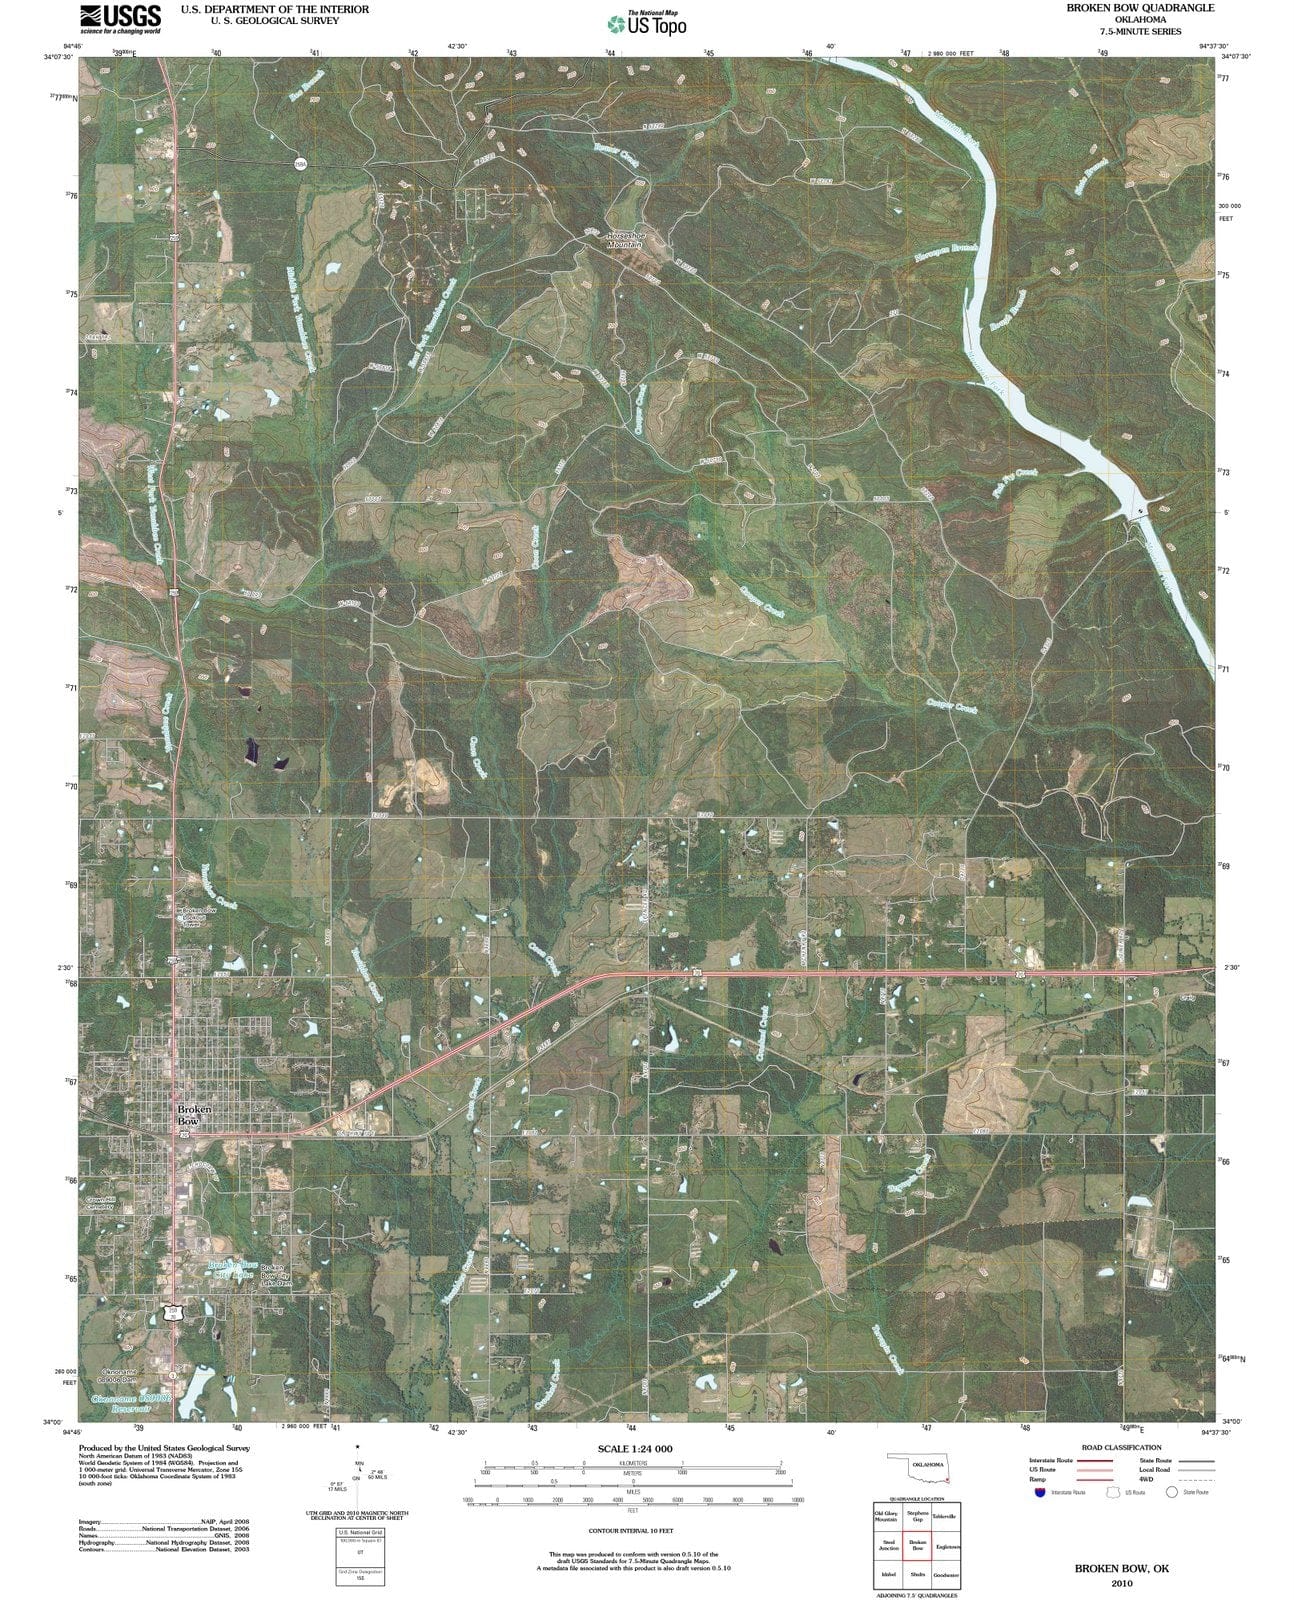 2010 Broken Bow, OK - Oklahoma - USGS Topographic Map